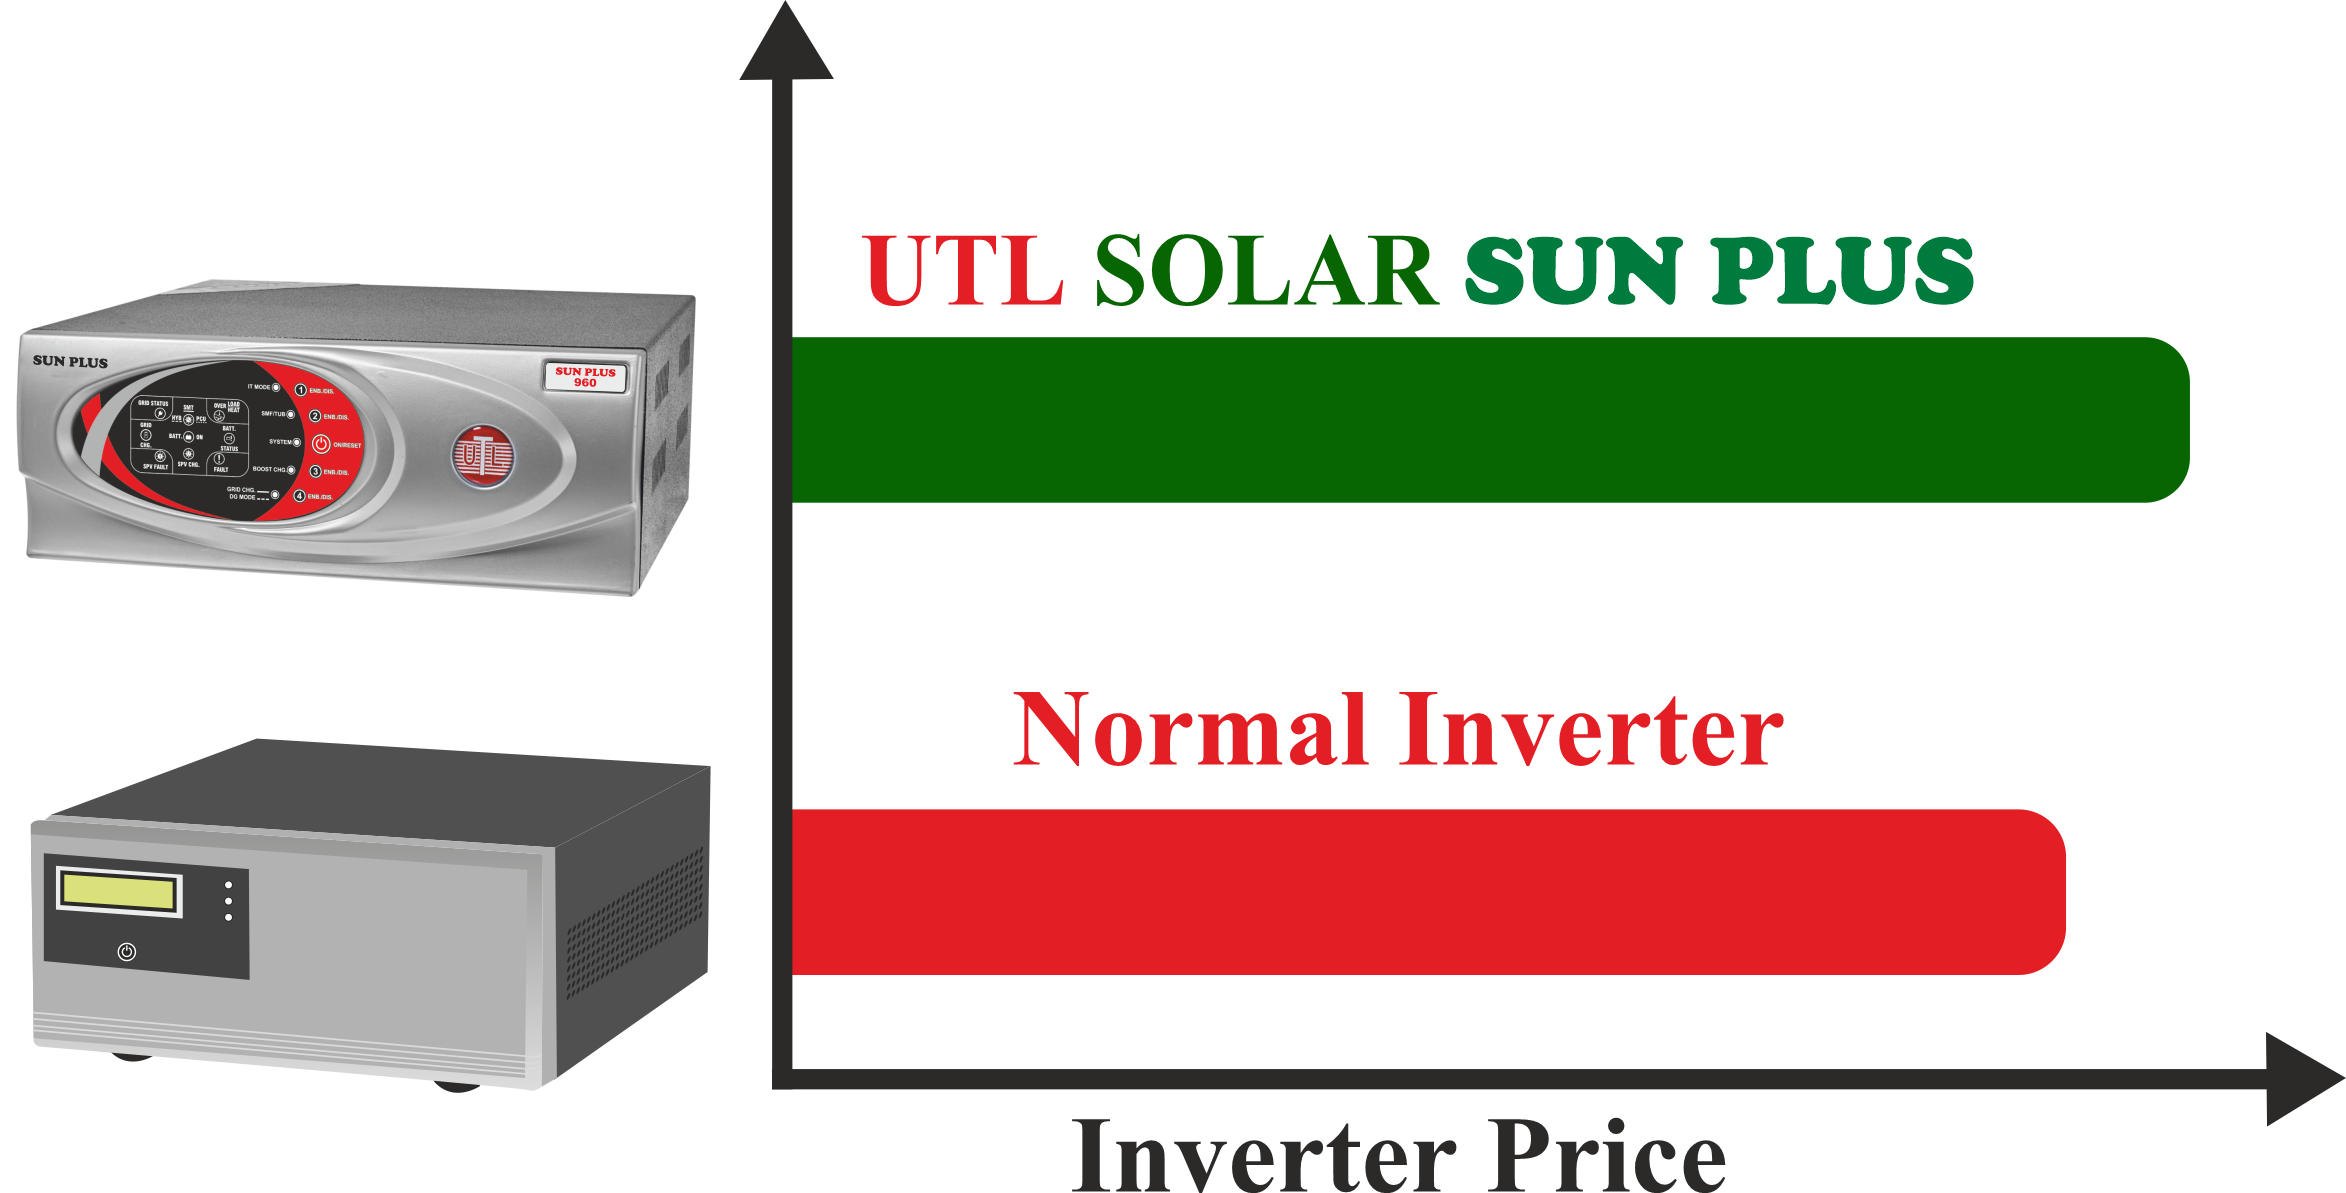 UTL Sunplus Solar Inverter provides more backup and battery protection.